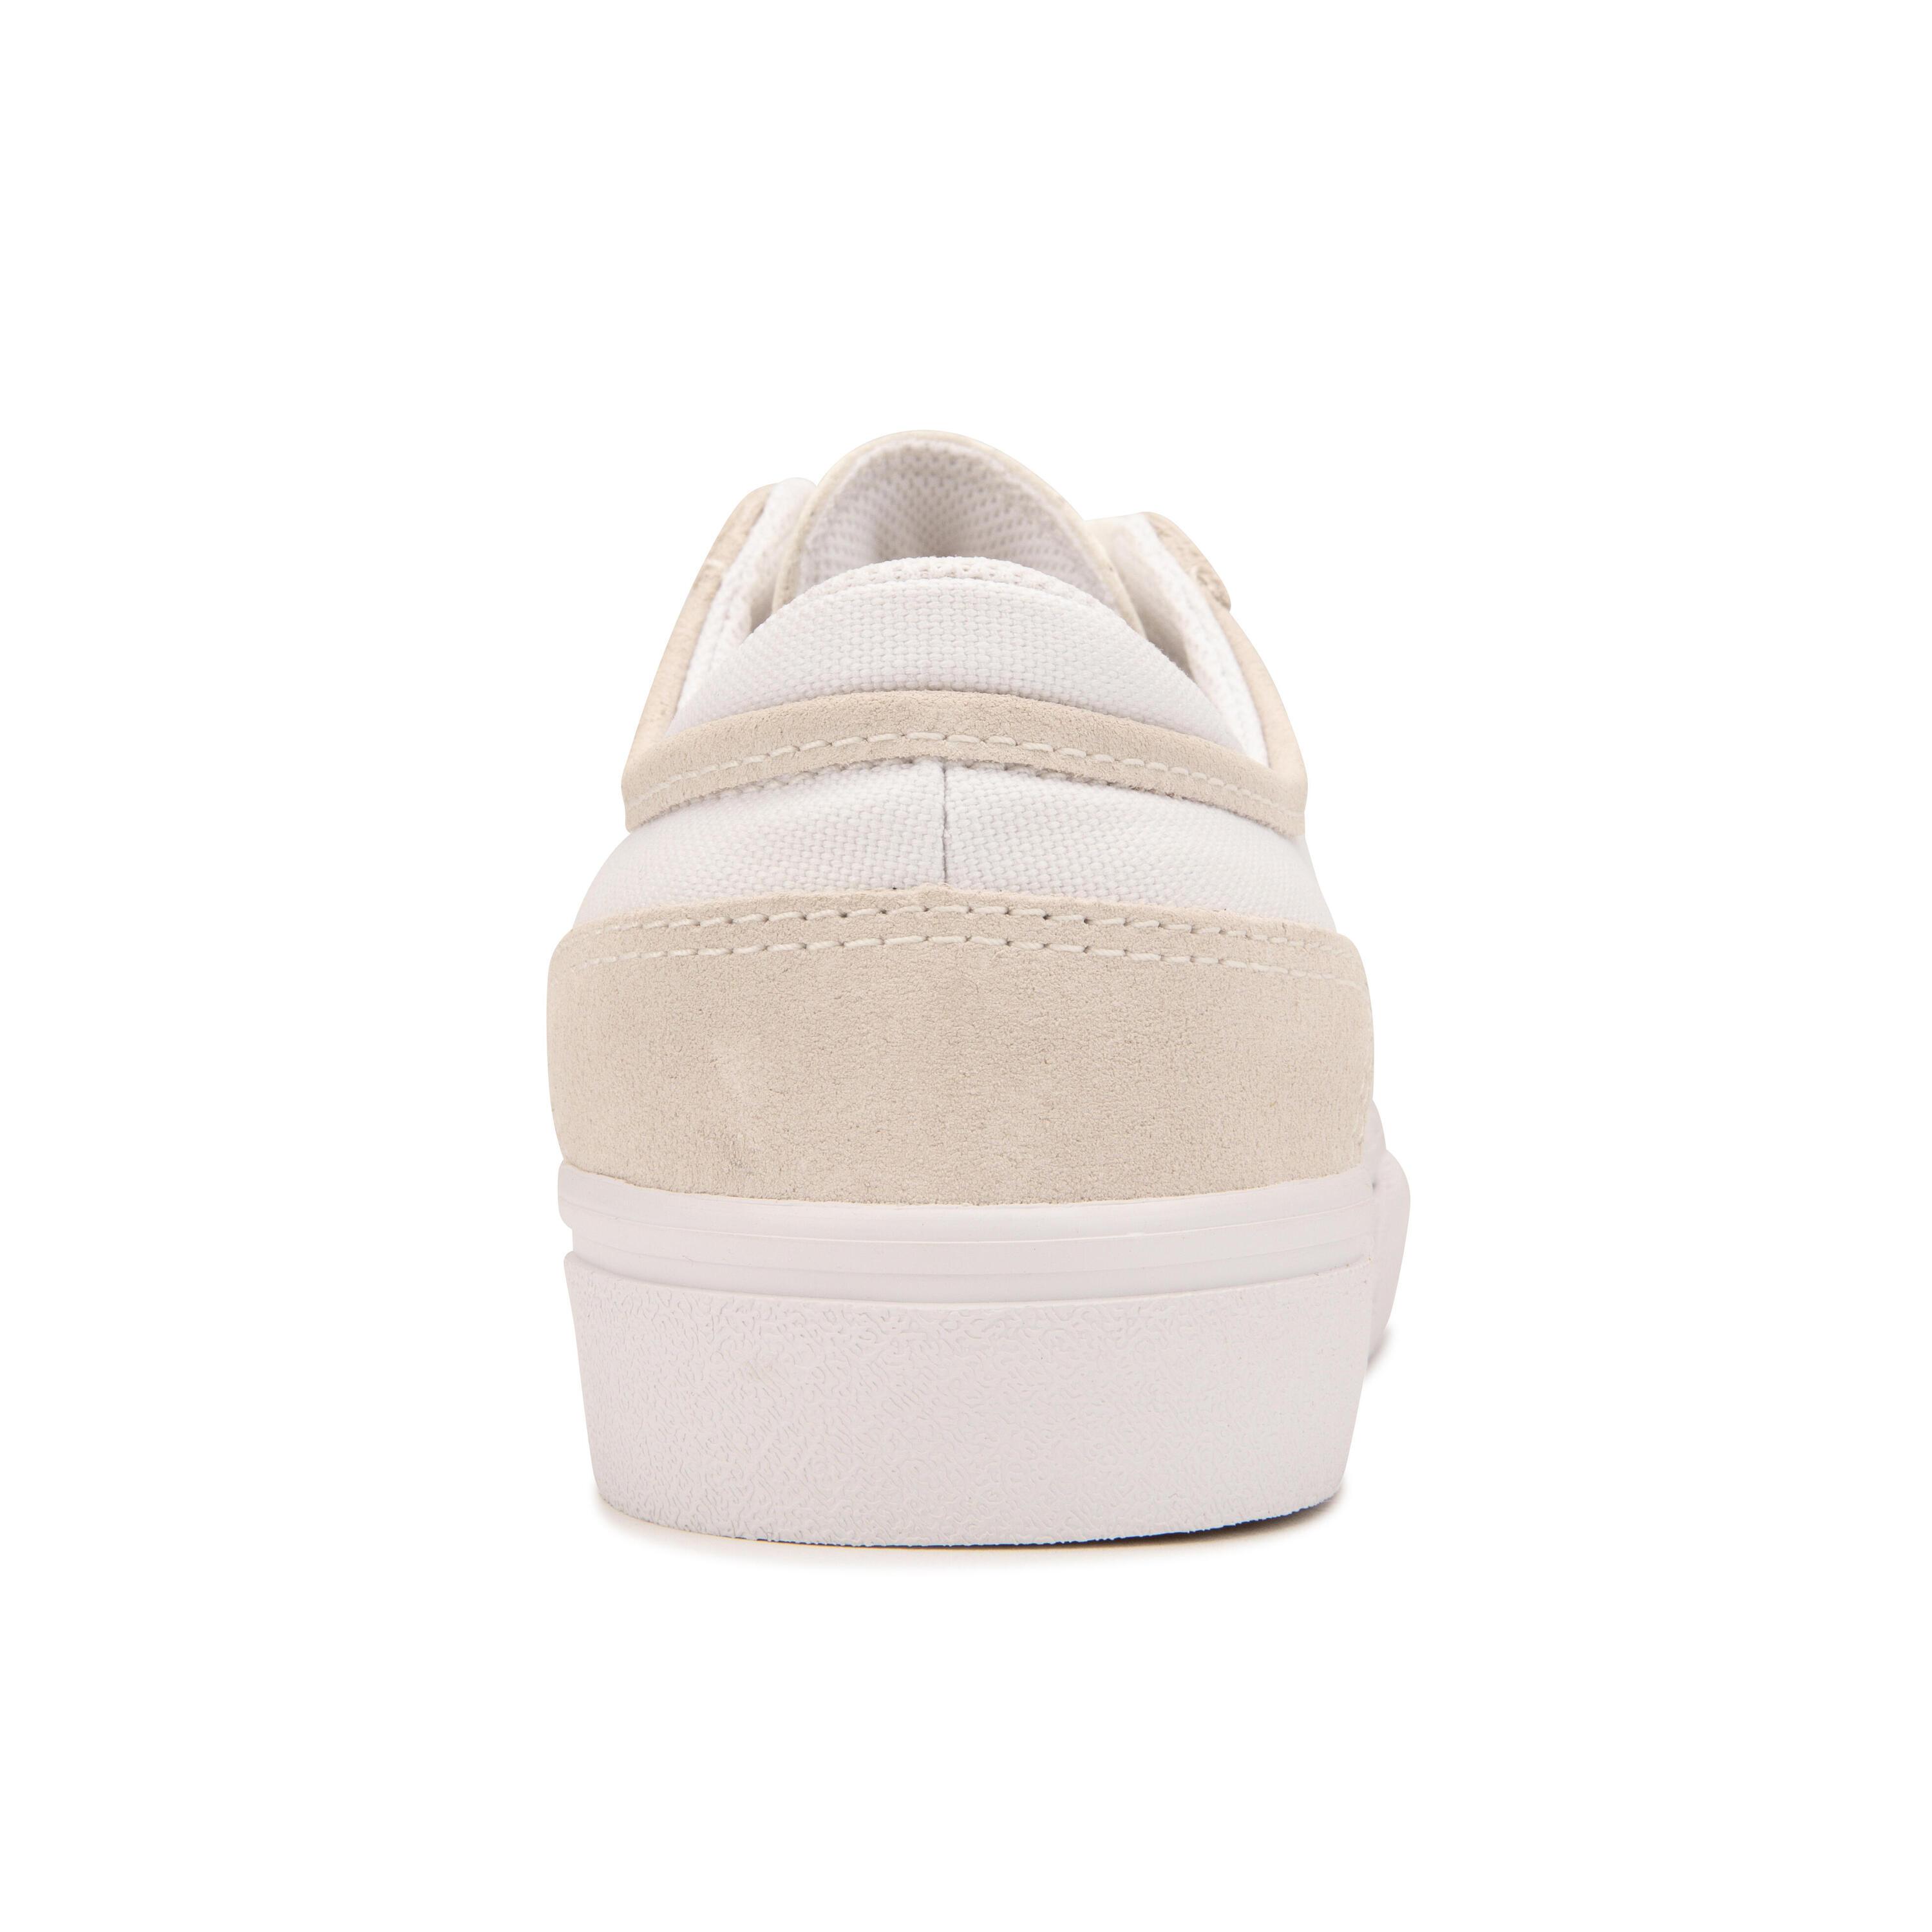 Adult Vulcanised Skate Shoes Vulca 500 II - White/White 8/18